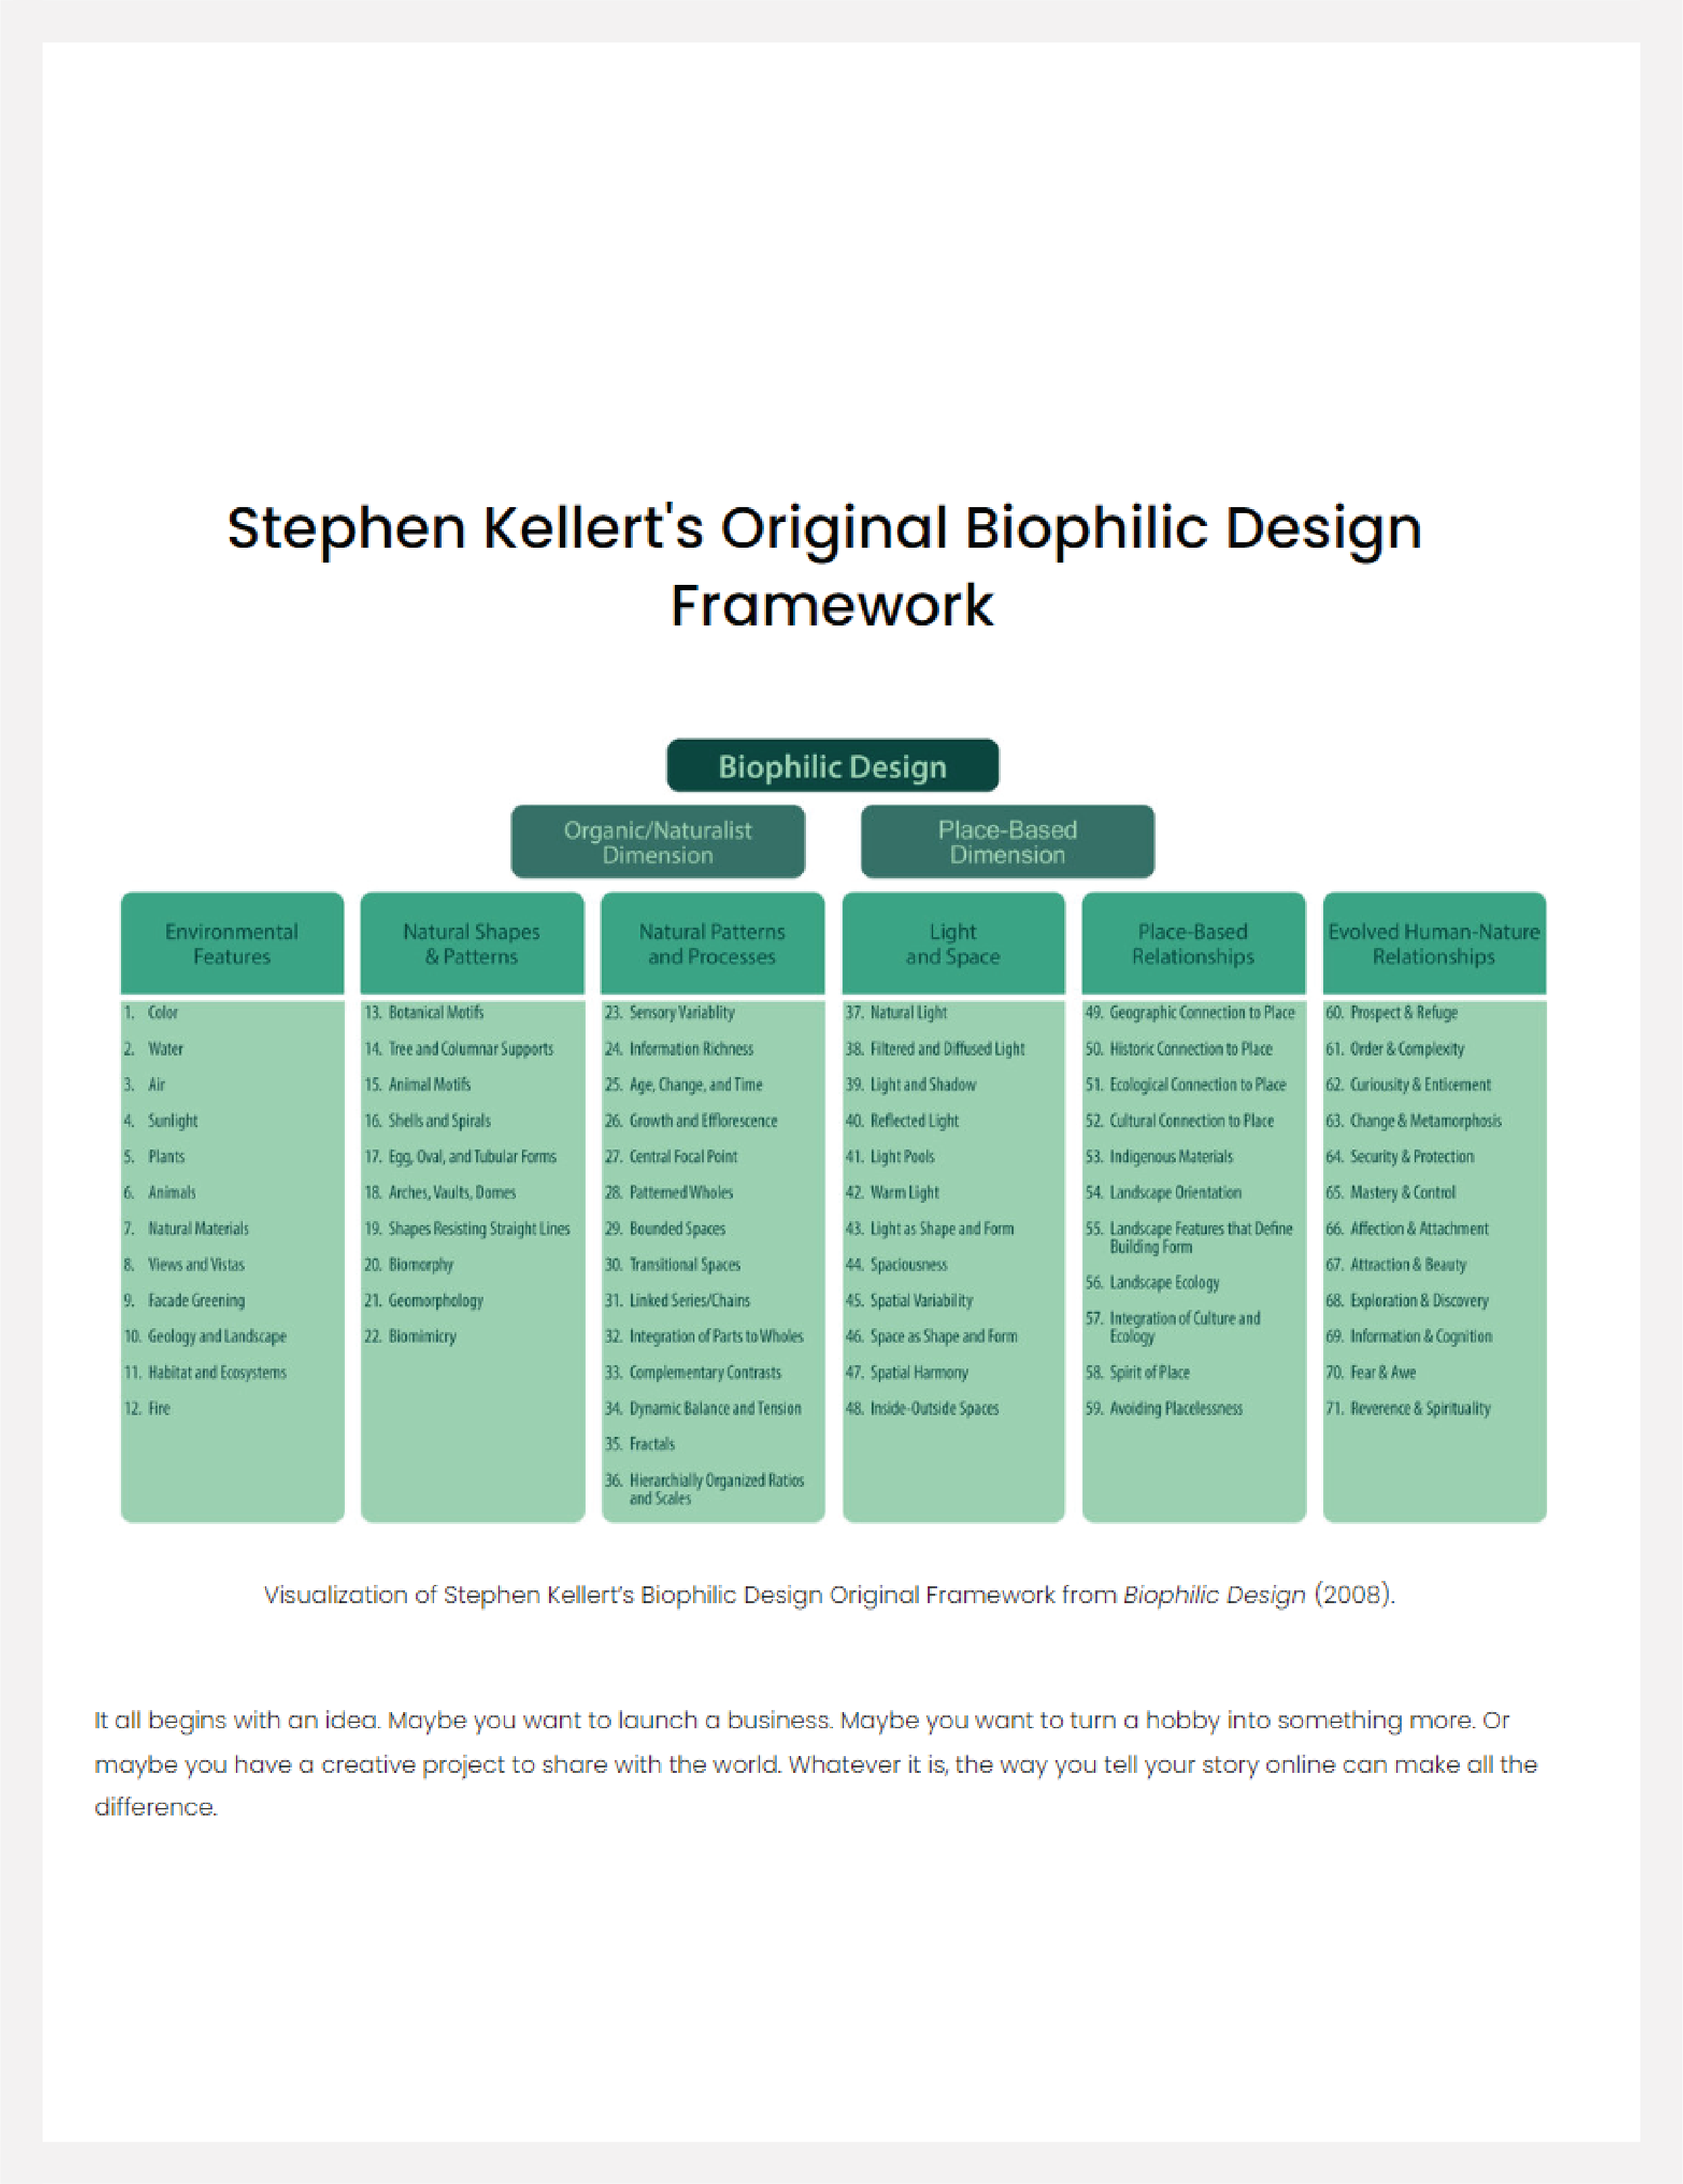 Kellert's Original Biophilic Design Framework-04